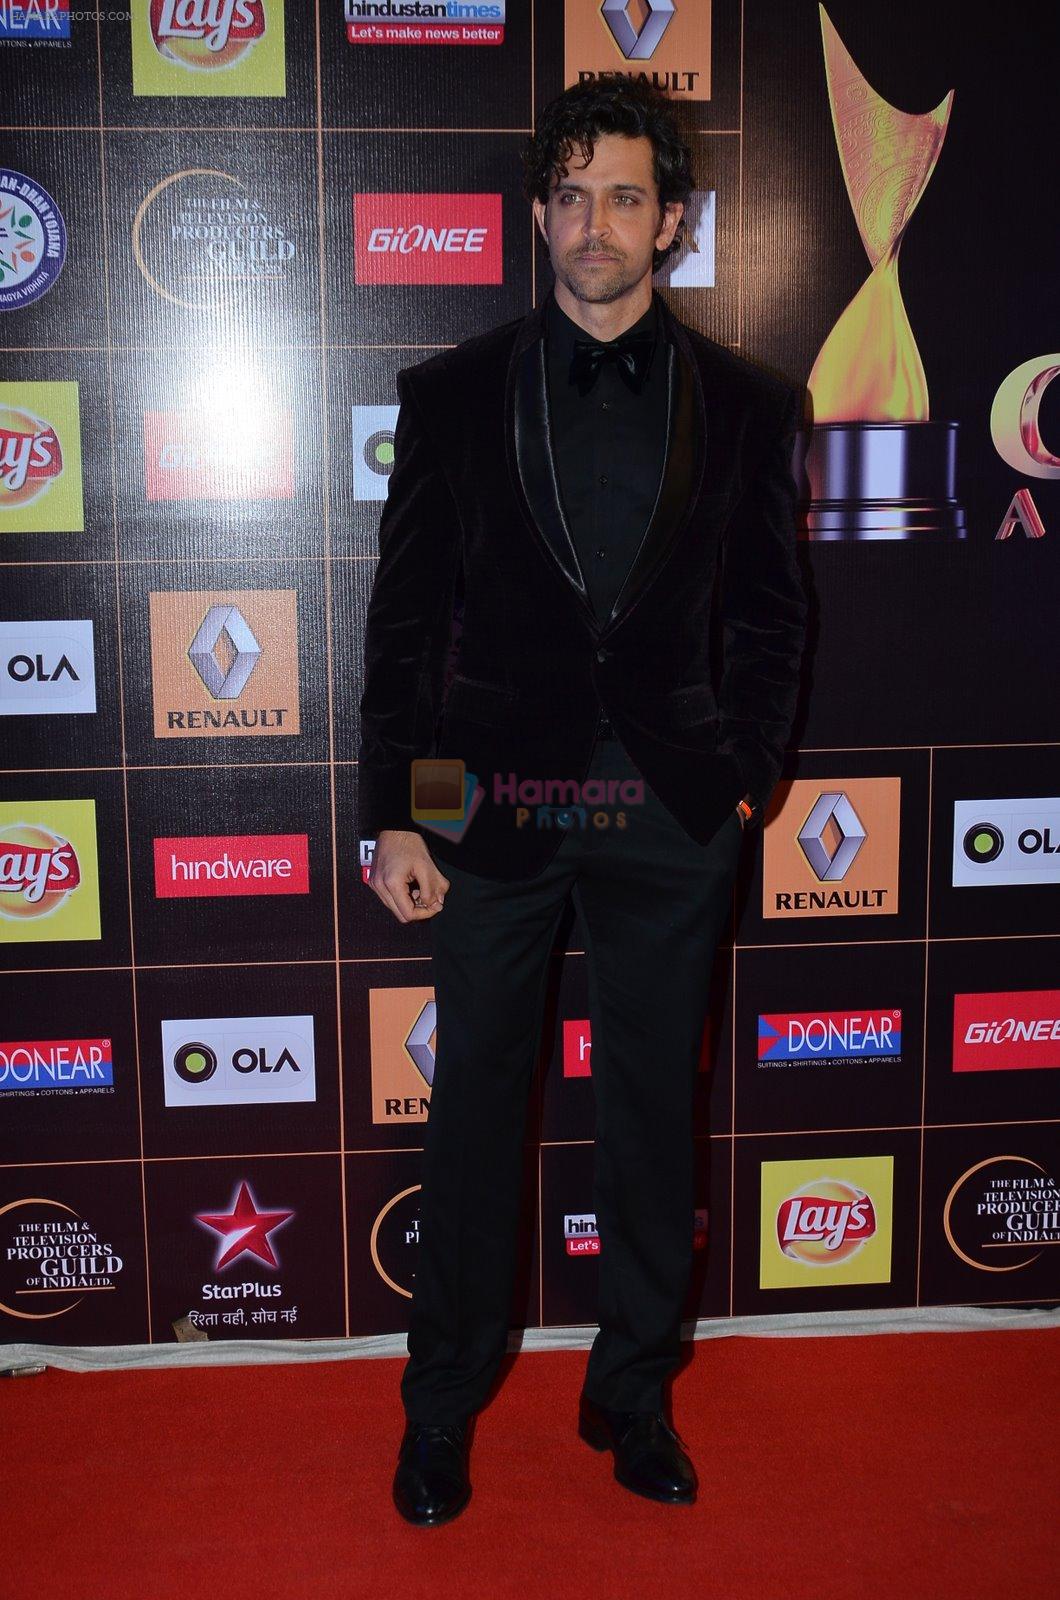 Hrithik Roshan at Producers Guild Awards 2015 in Mumbai on 11th Jan 2015